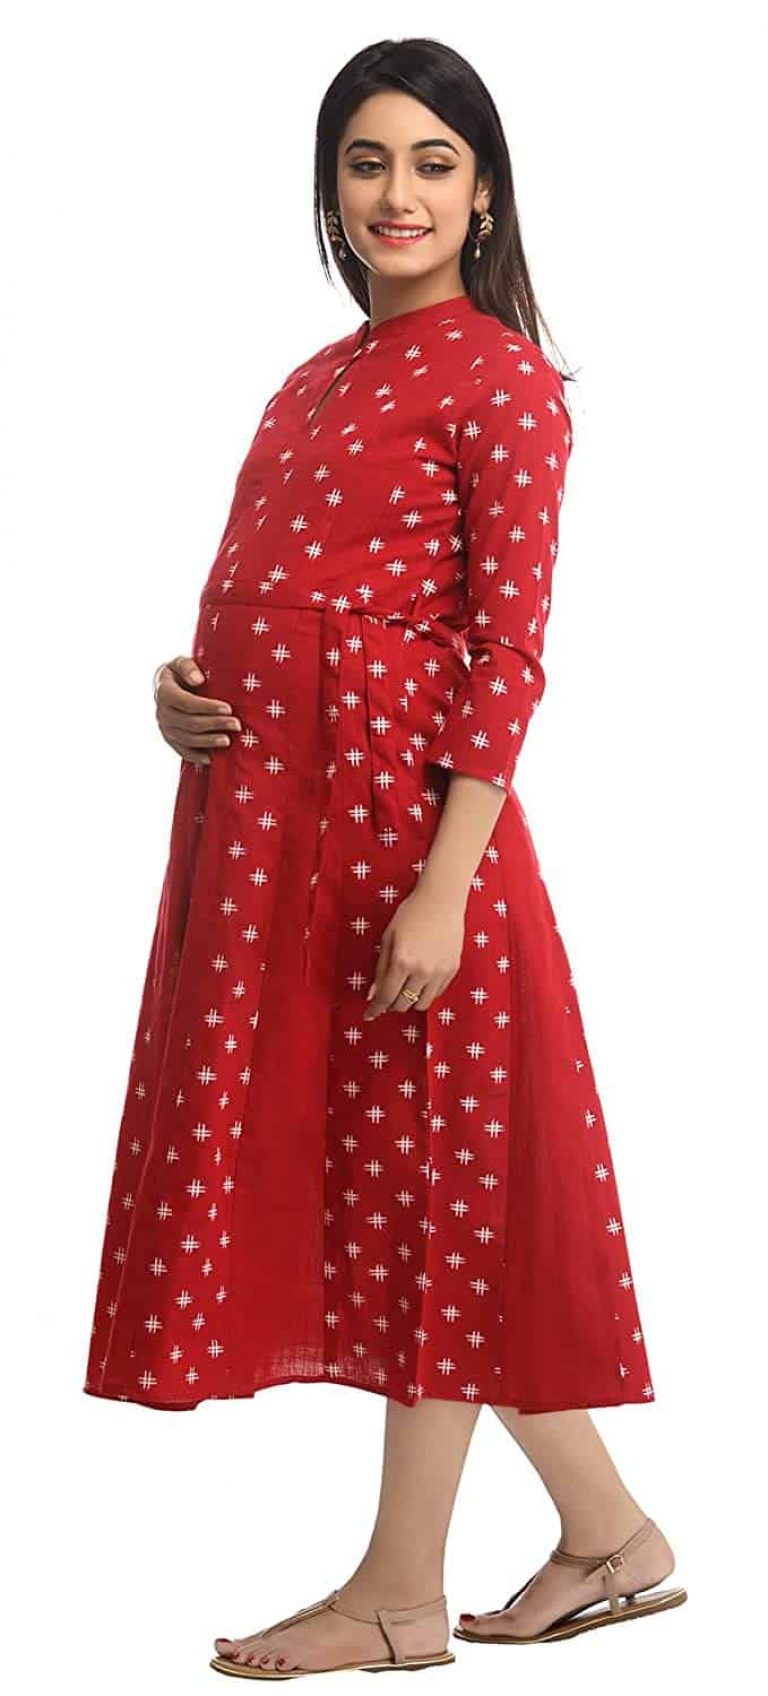 Top 10 Maternity Photoshoot Dresses 117